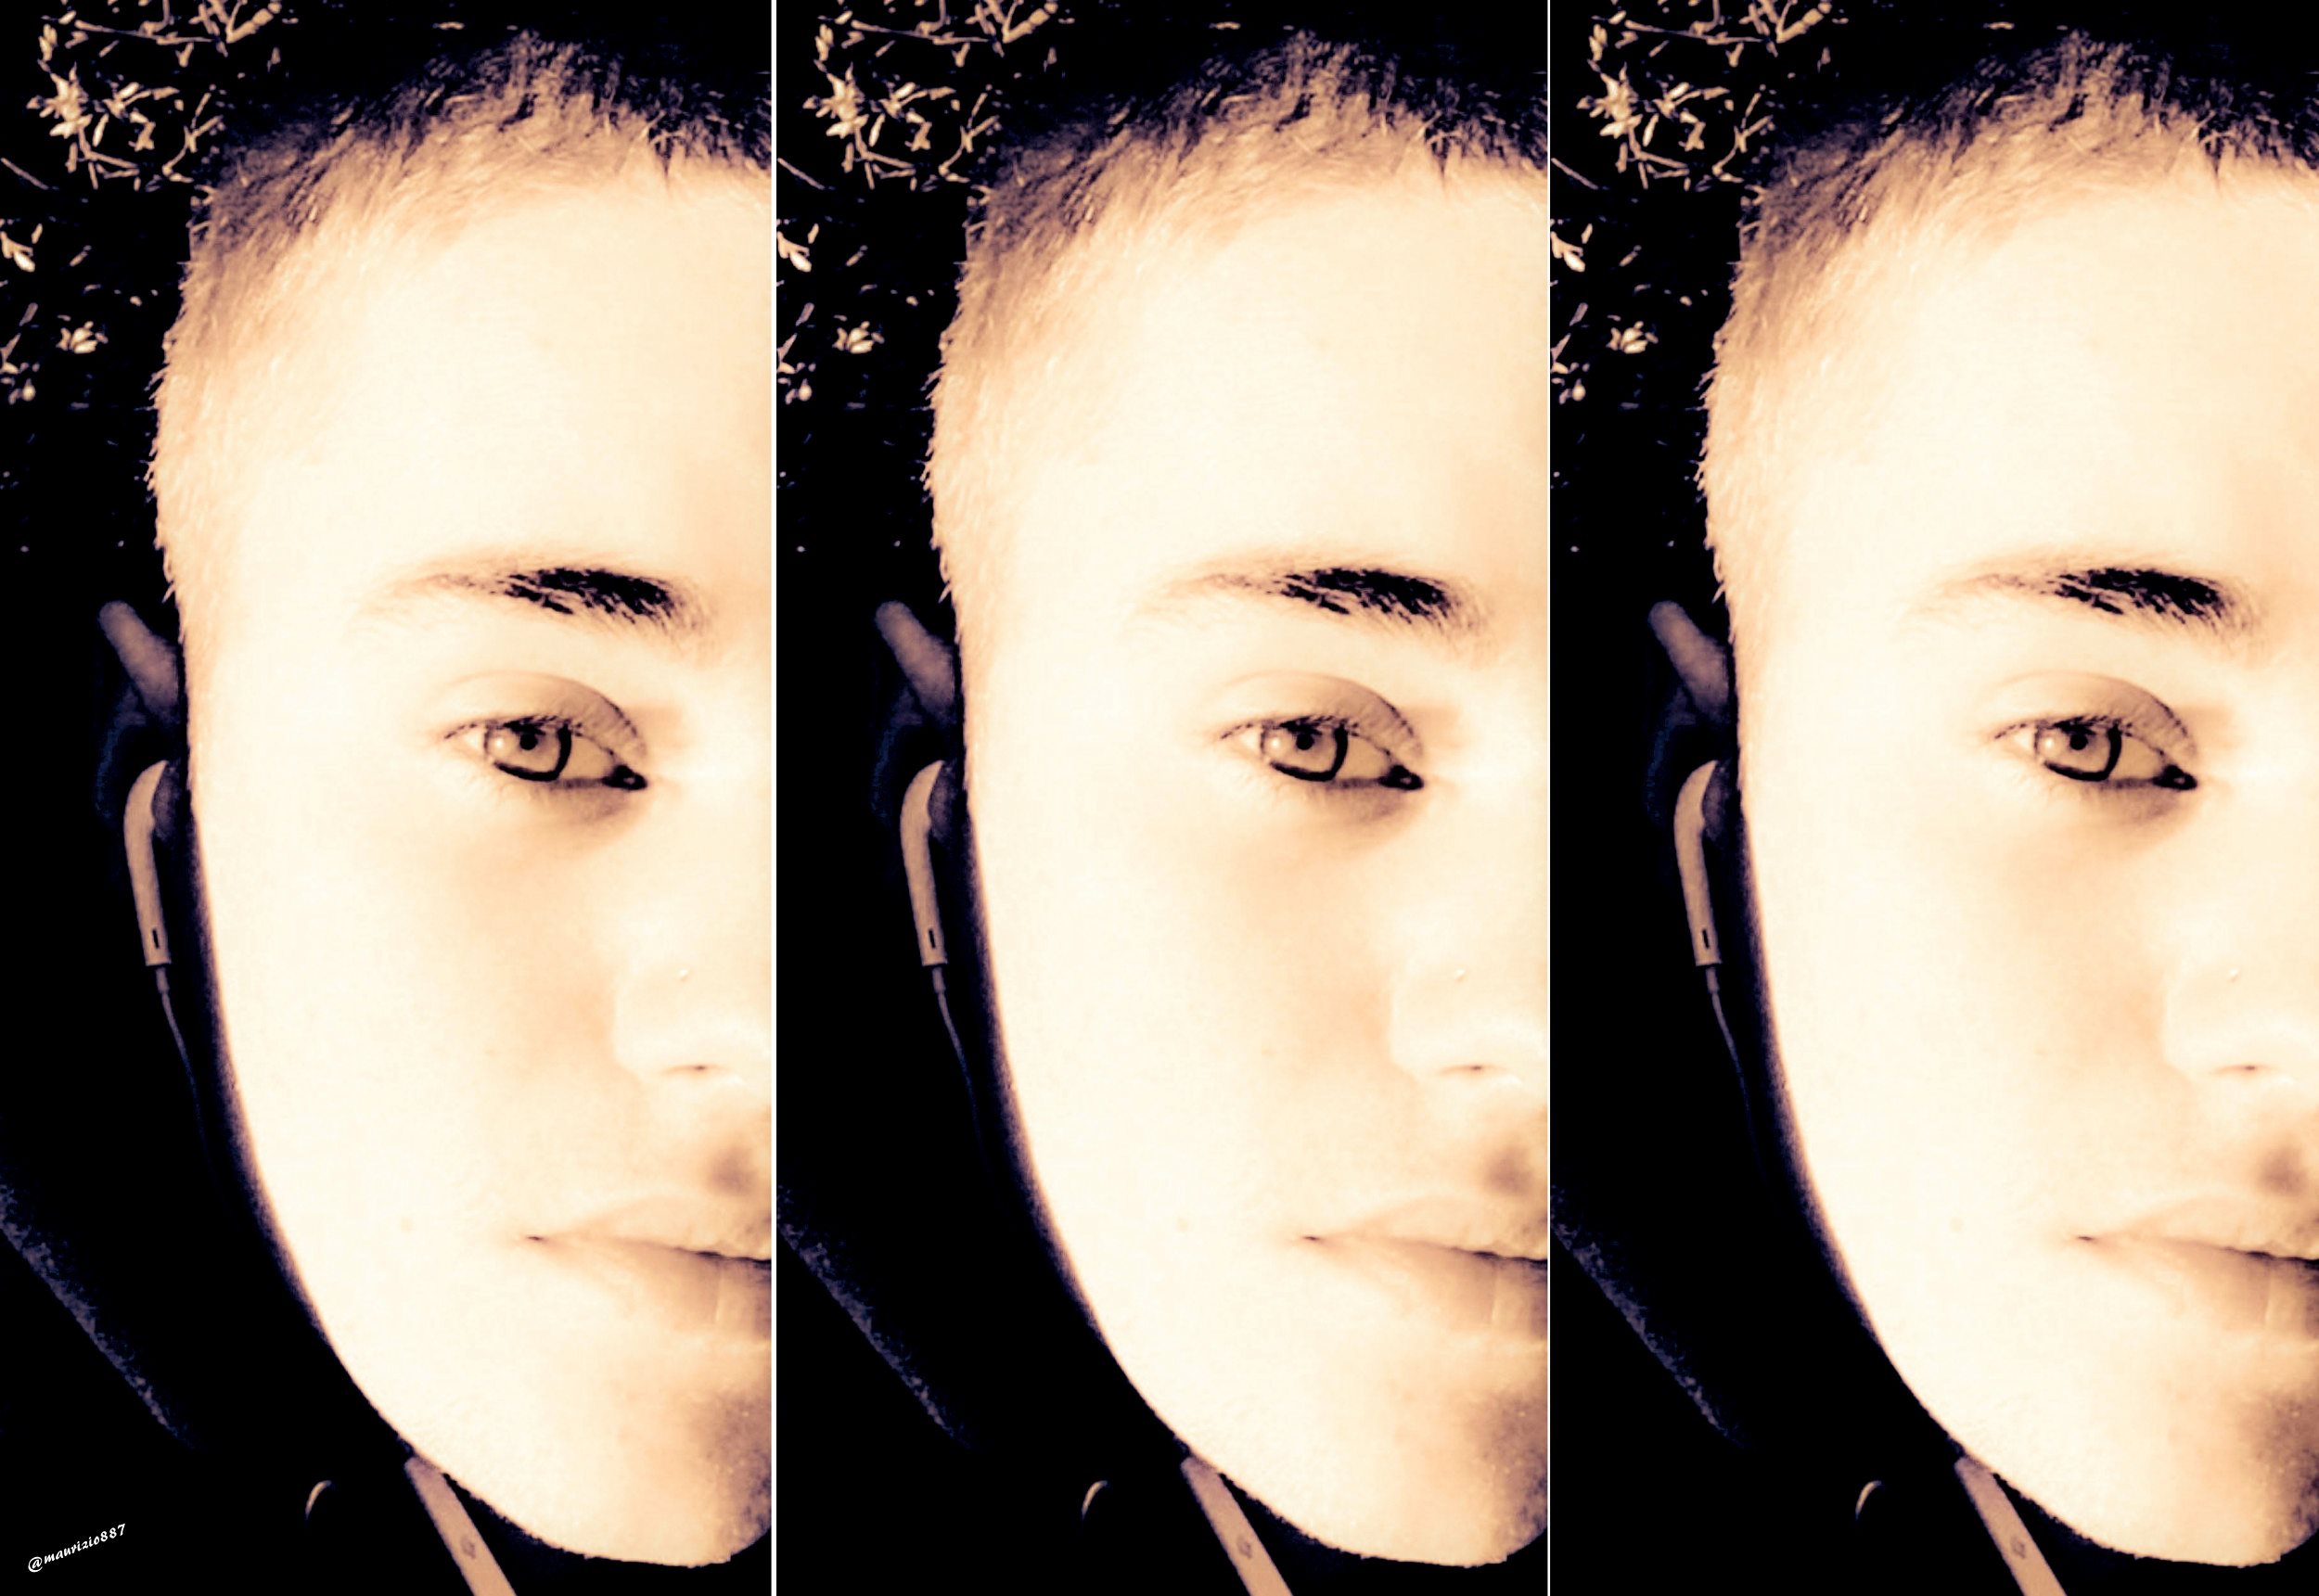 Justin Bieber Image Wallpaper Photos